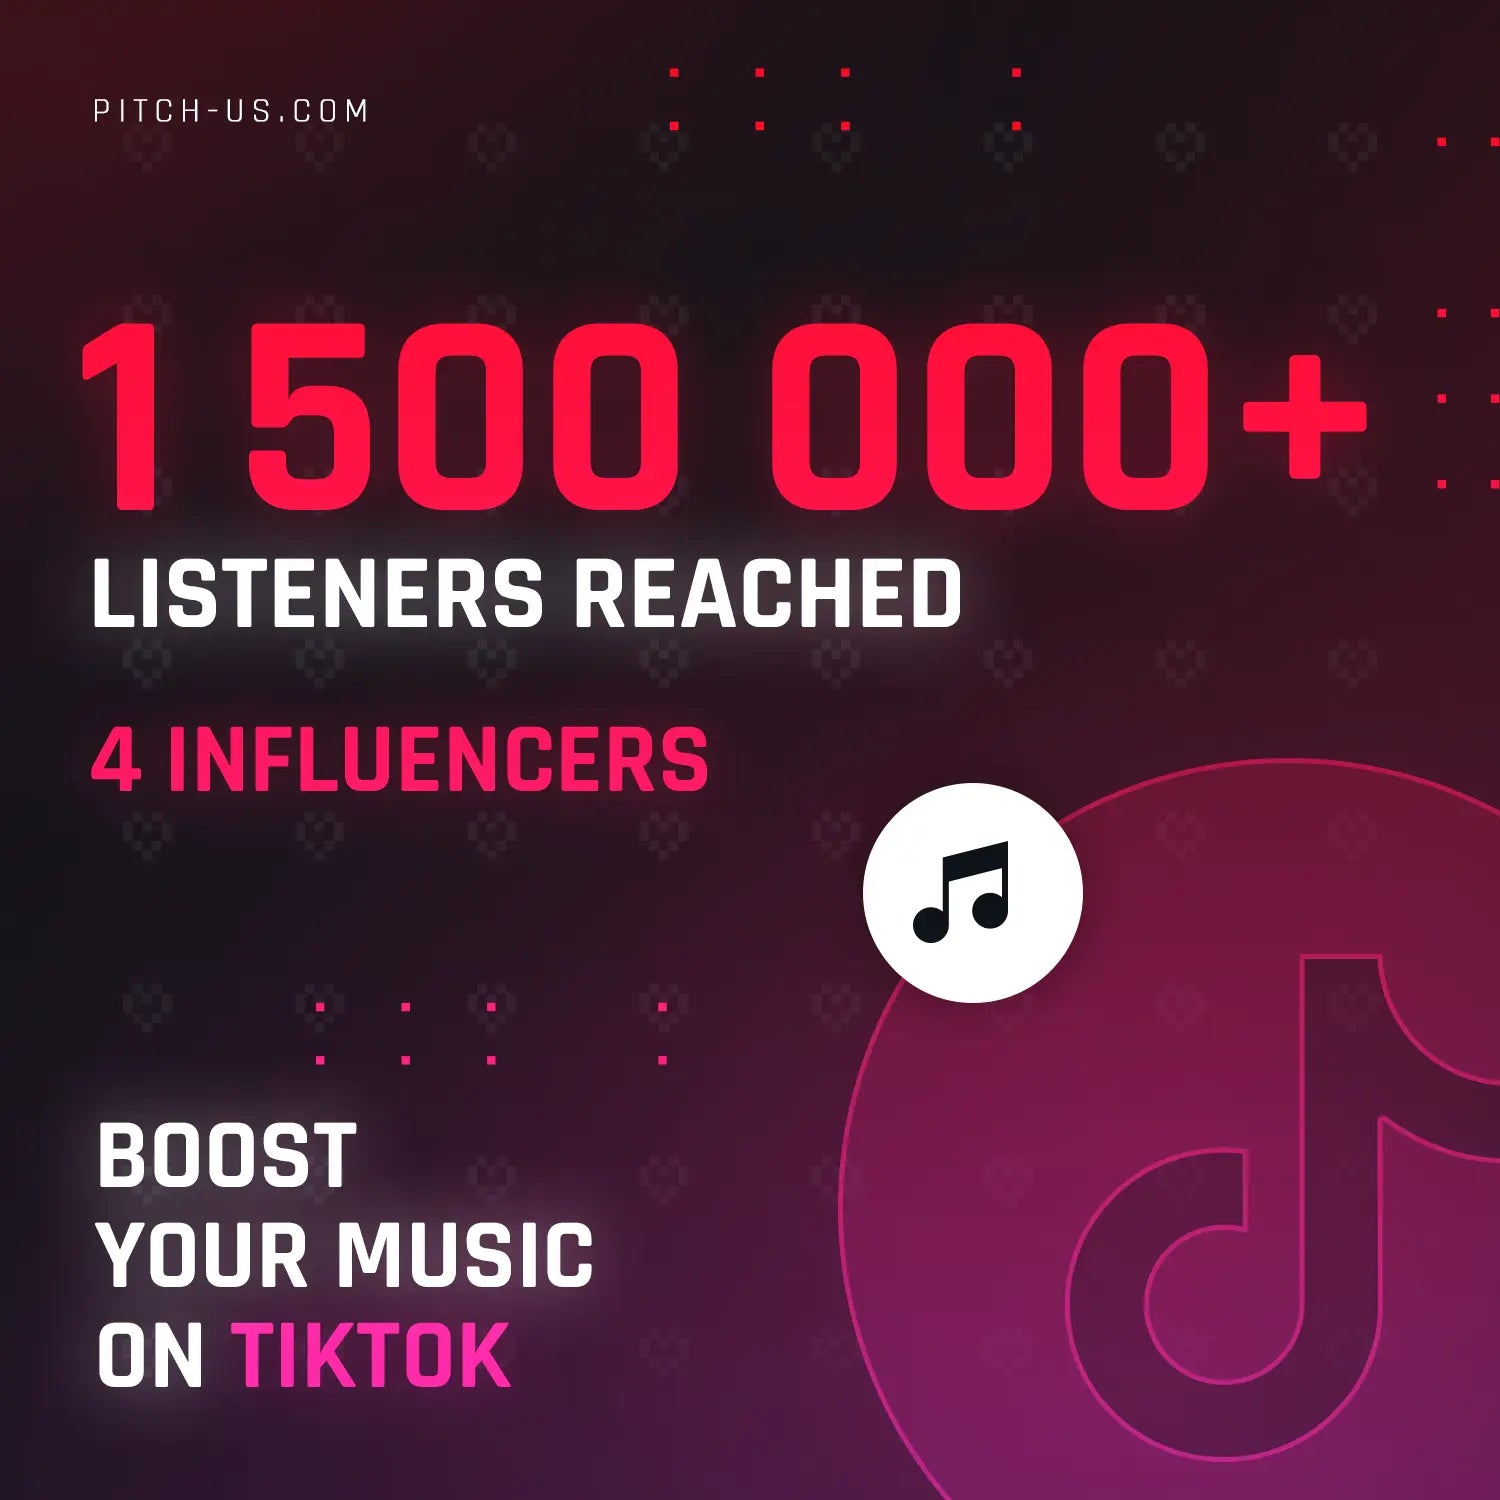 TikTok Dominate (1,500,000+ Listeners) Pitch-Us